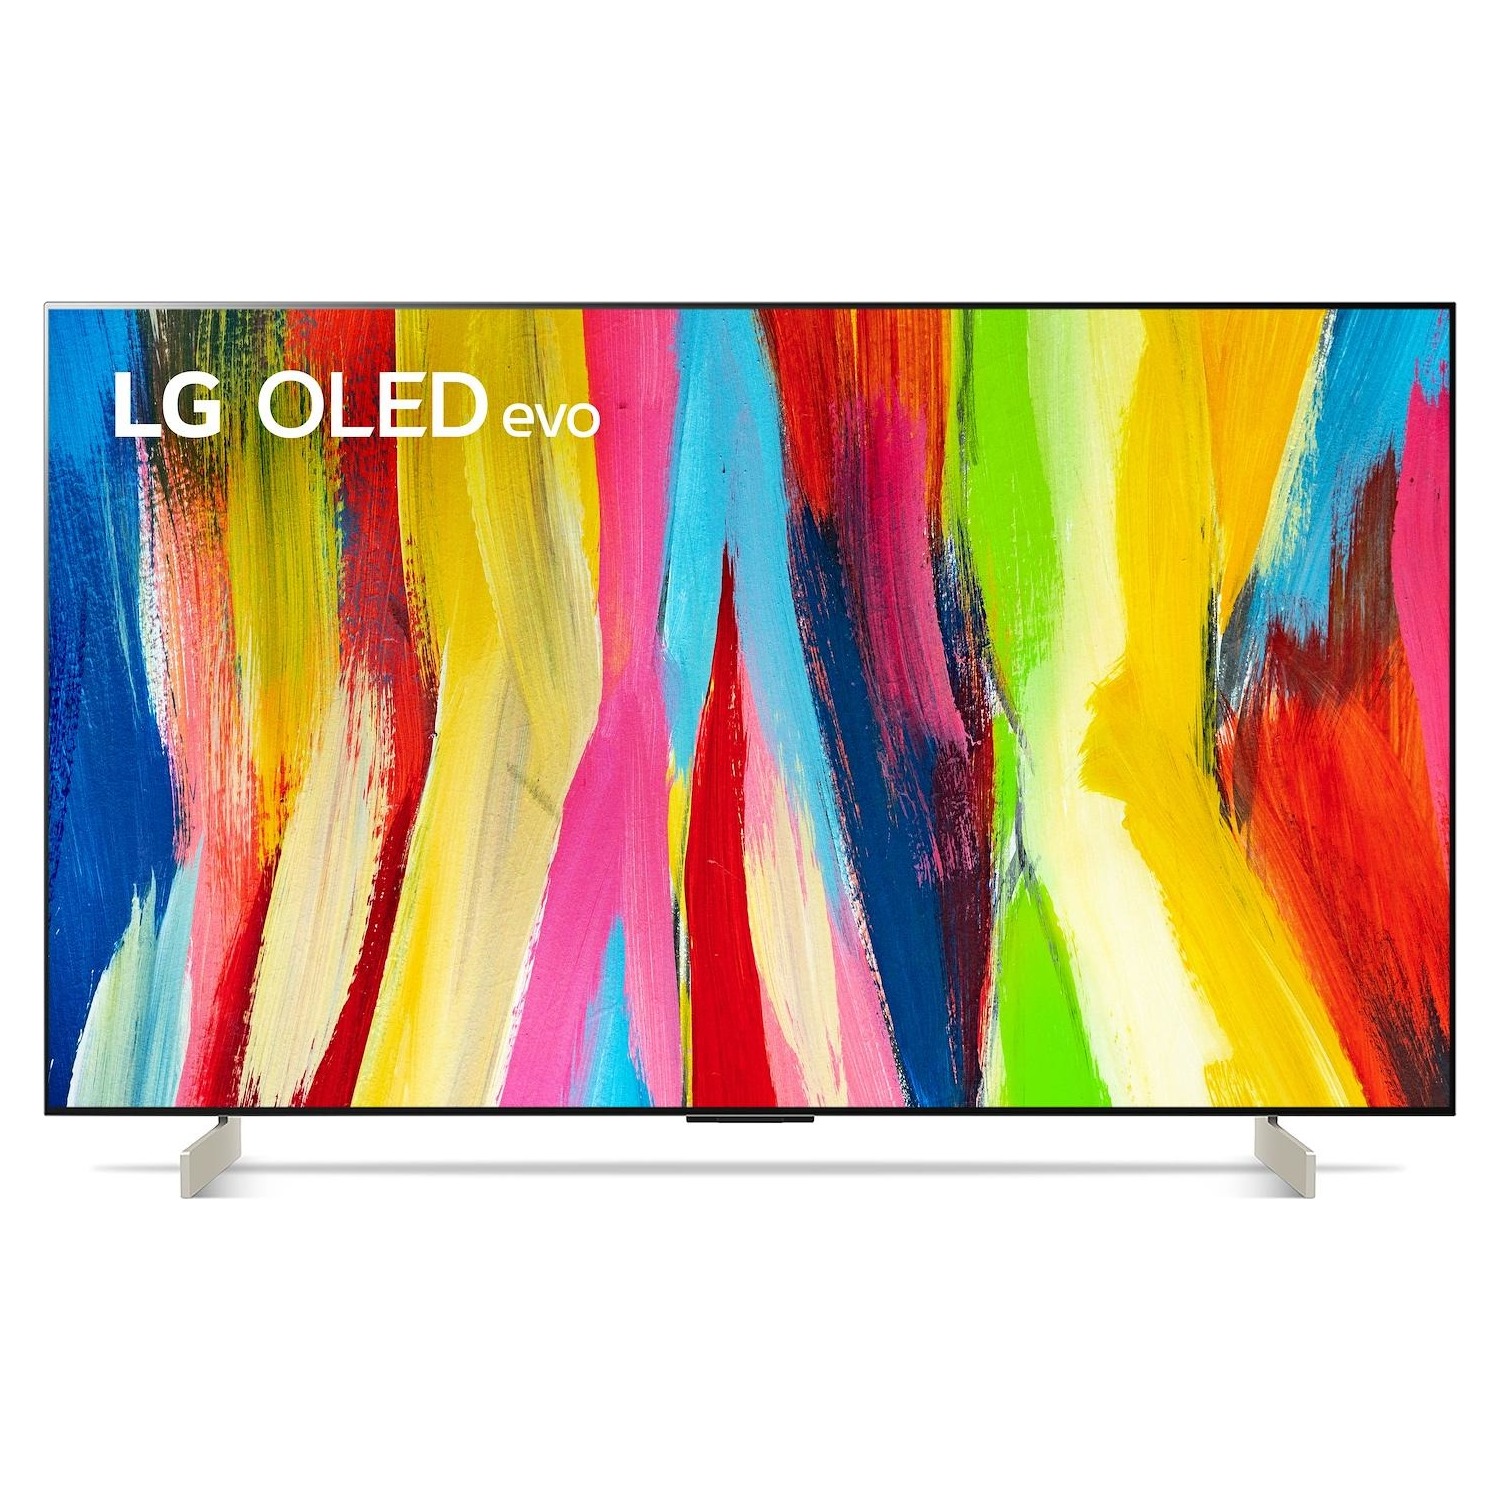 Immagine per TV OLED UHD 4K Smart LG OLED42C26 da DIMOStore